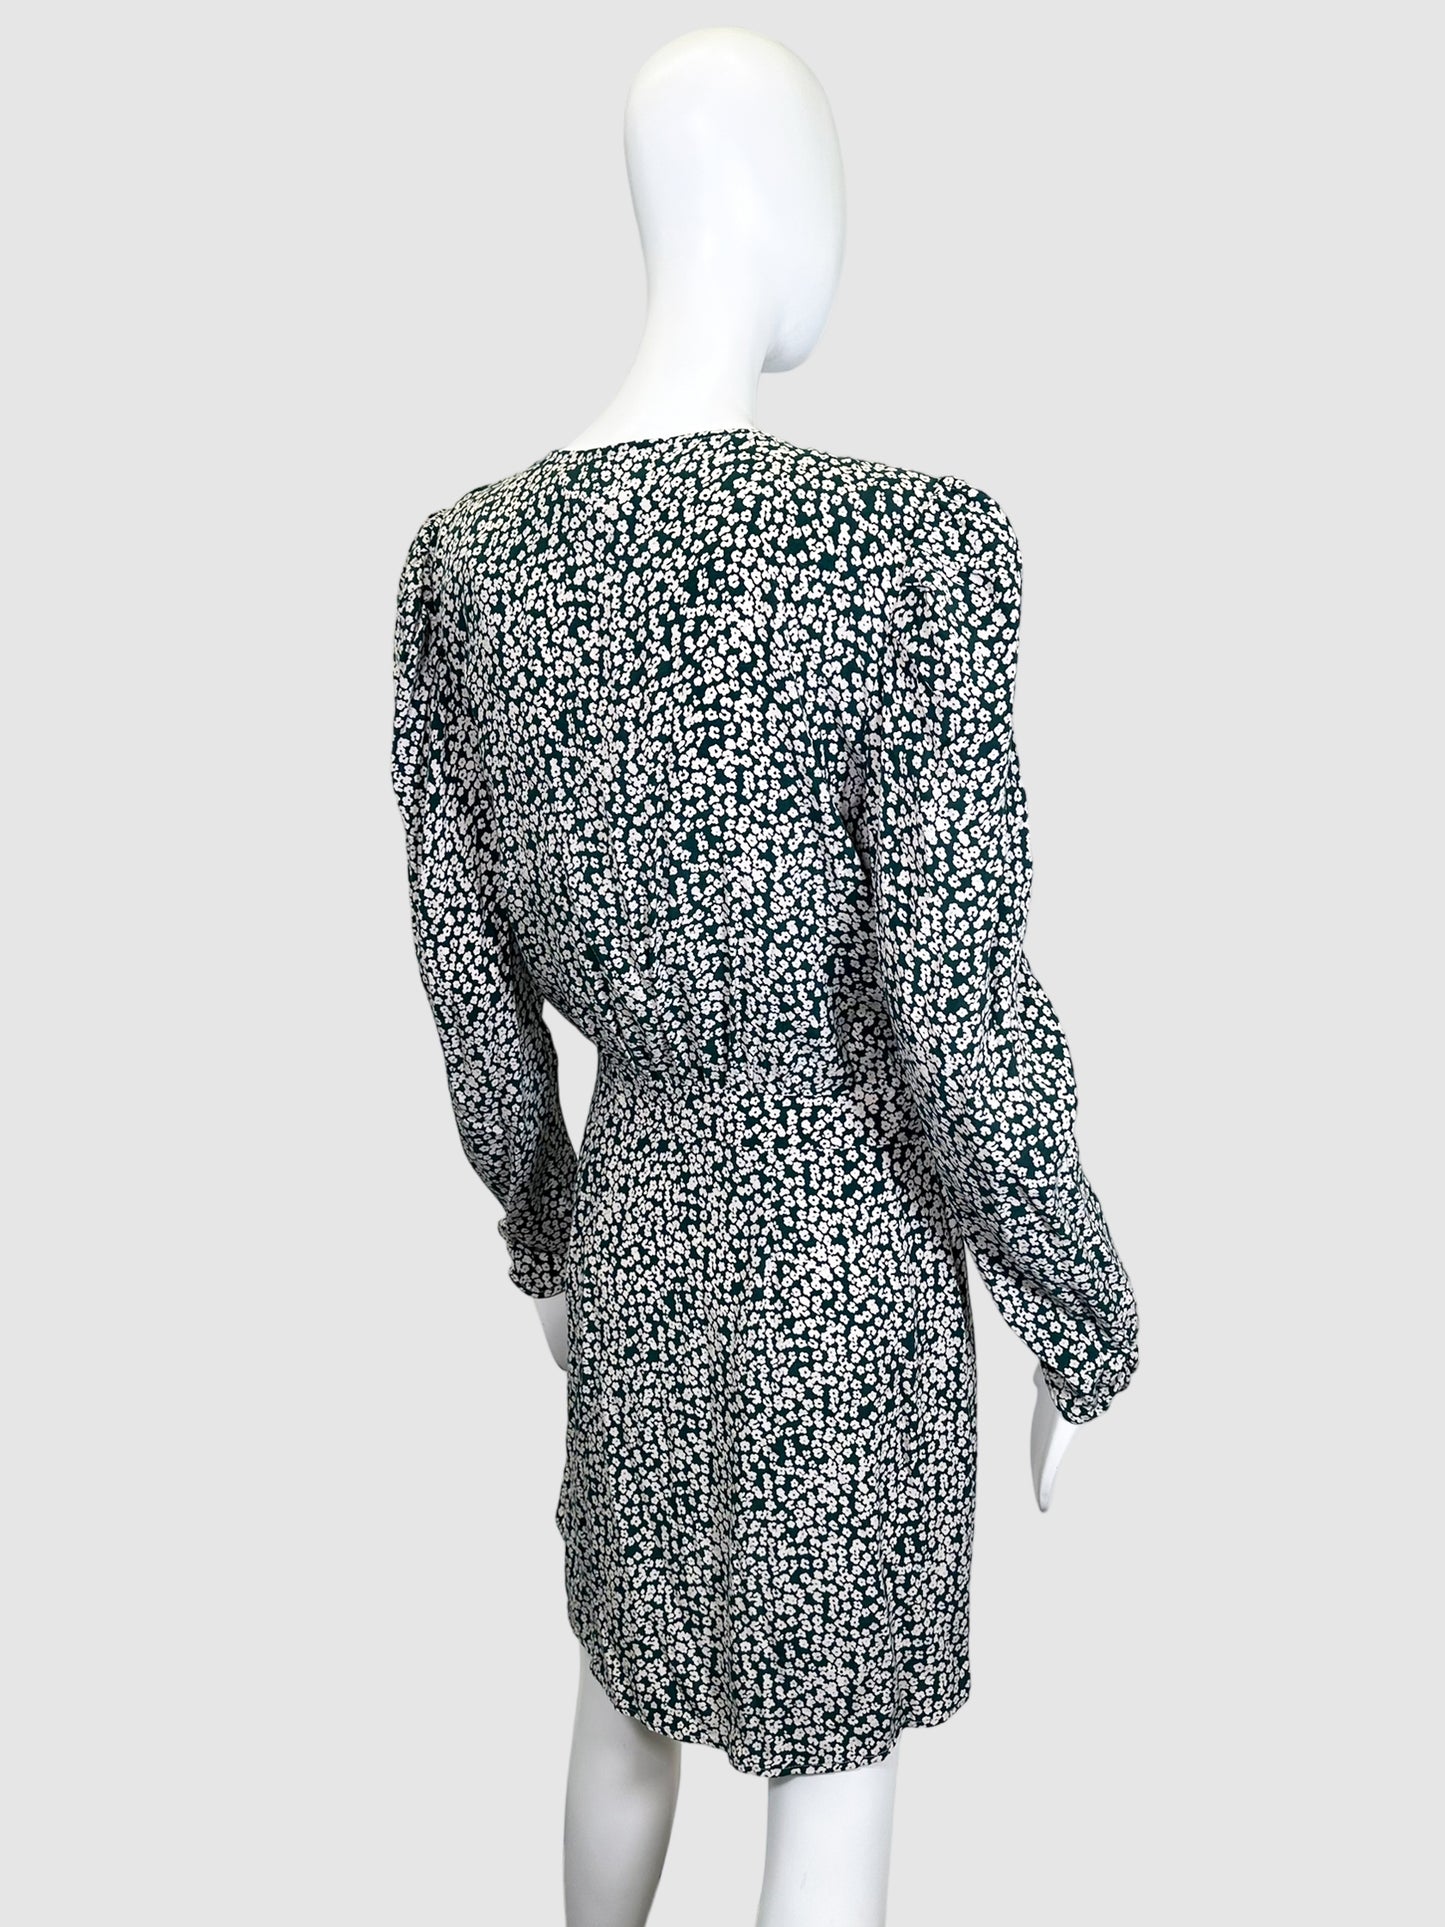 Floral Print Dress - Size 12